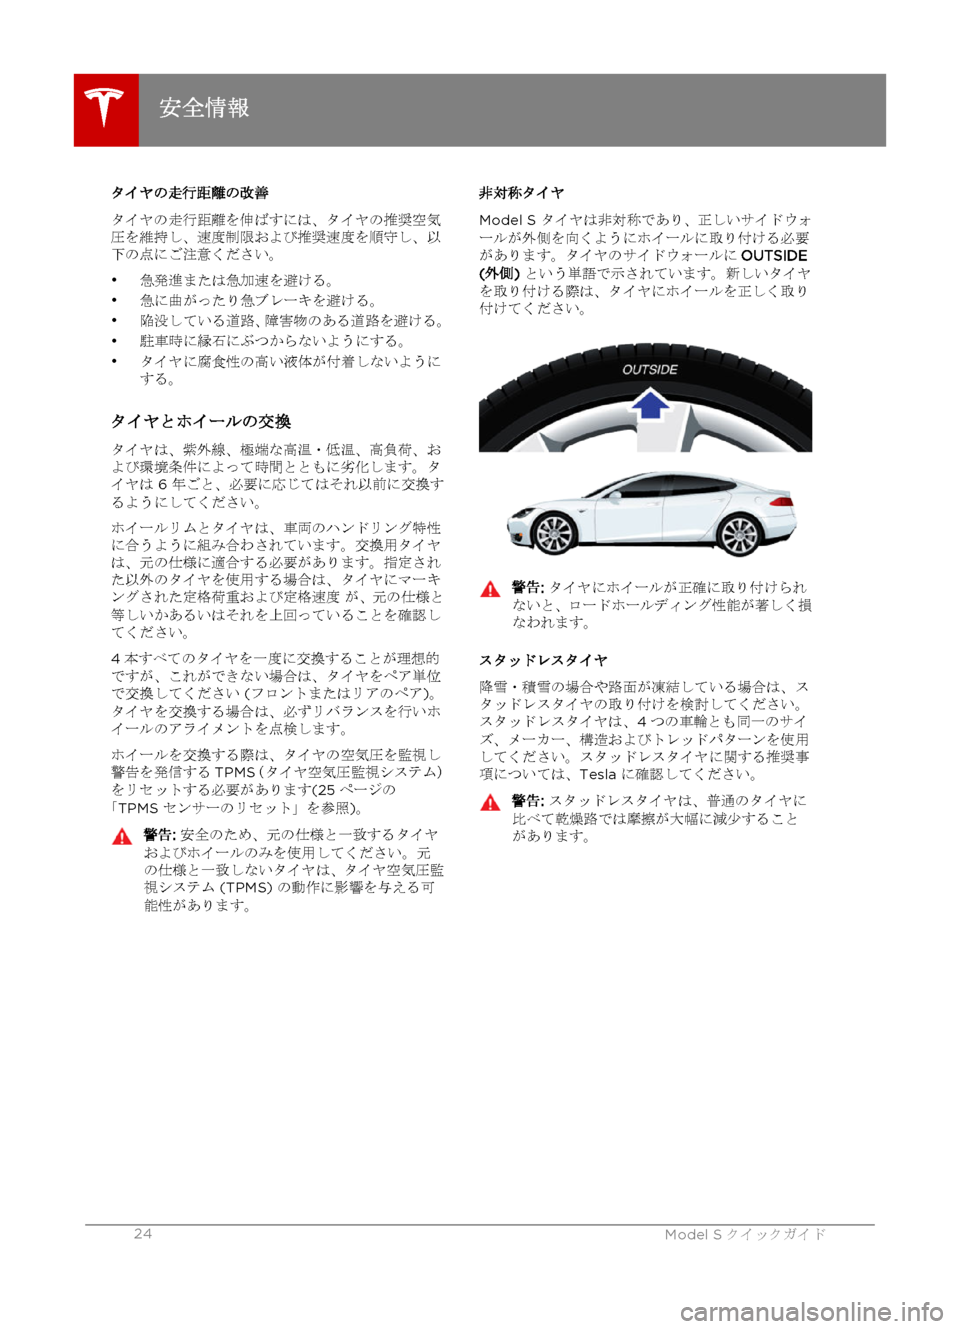 TESLA MODEL S 2015  クイックガイド (in Japanese) タイヤの走行距離の改善
タイヤの走行距離を伸ばすには、タイヤの推奨空気
圧を維持し、速度制限および推奨速度を順守し、以
下の点にご注意く�